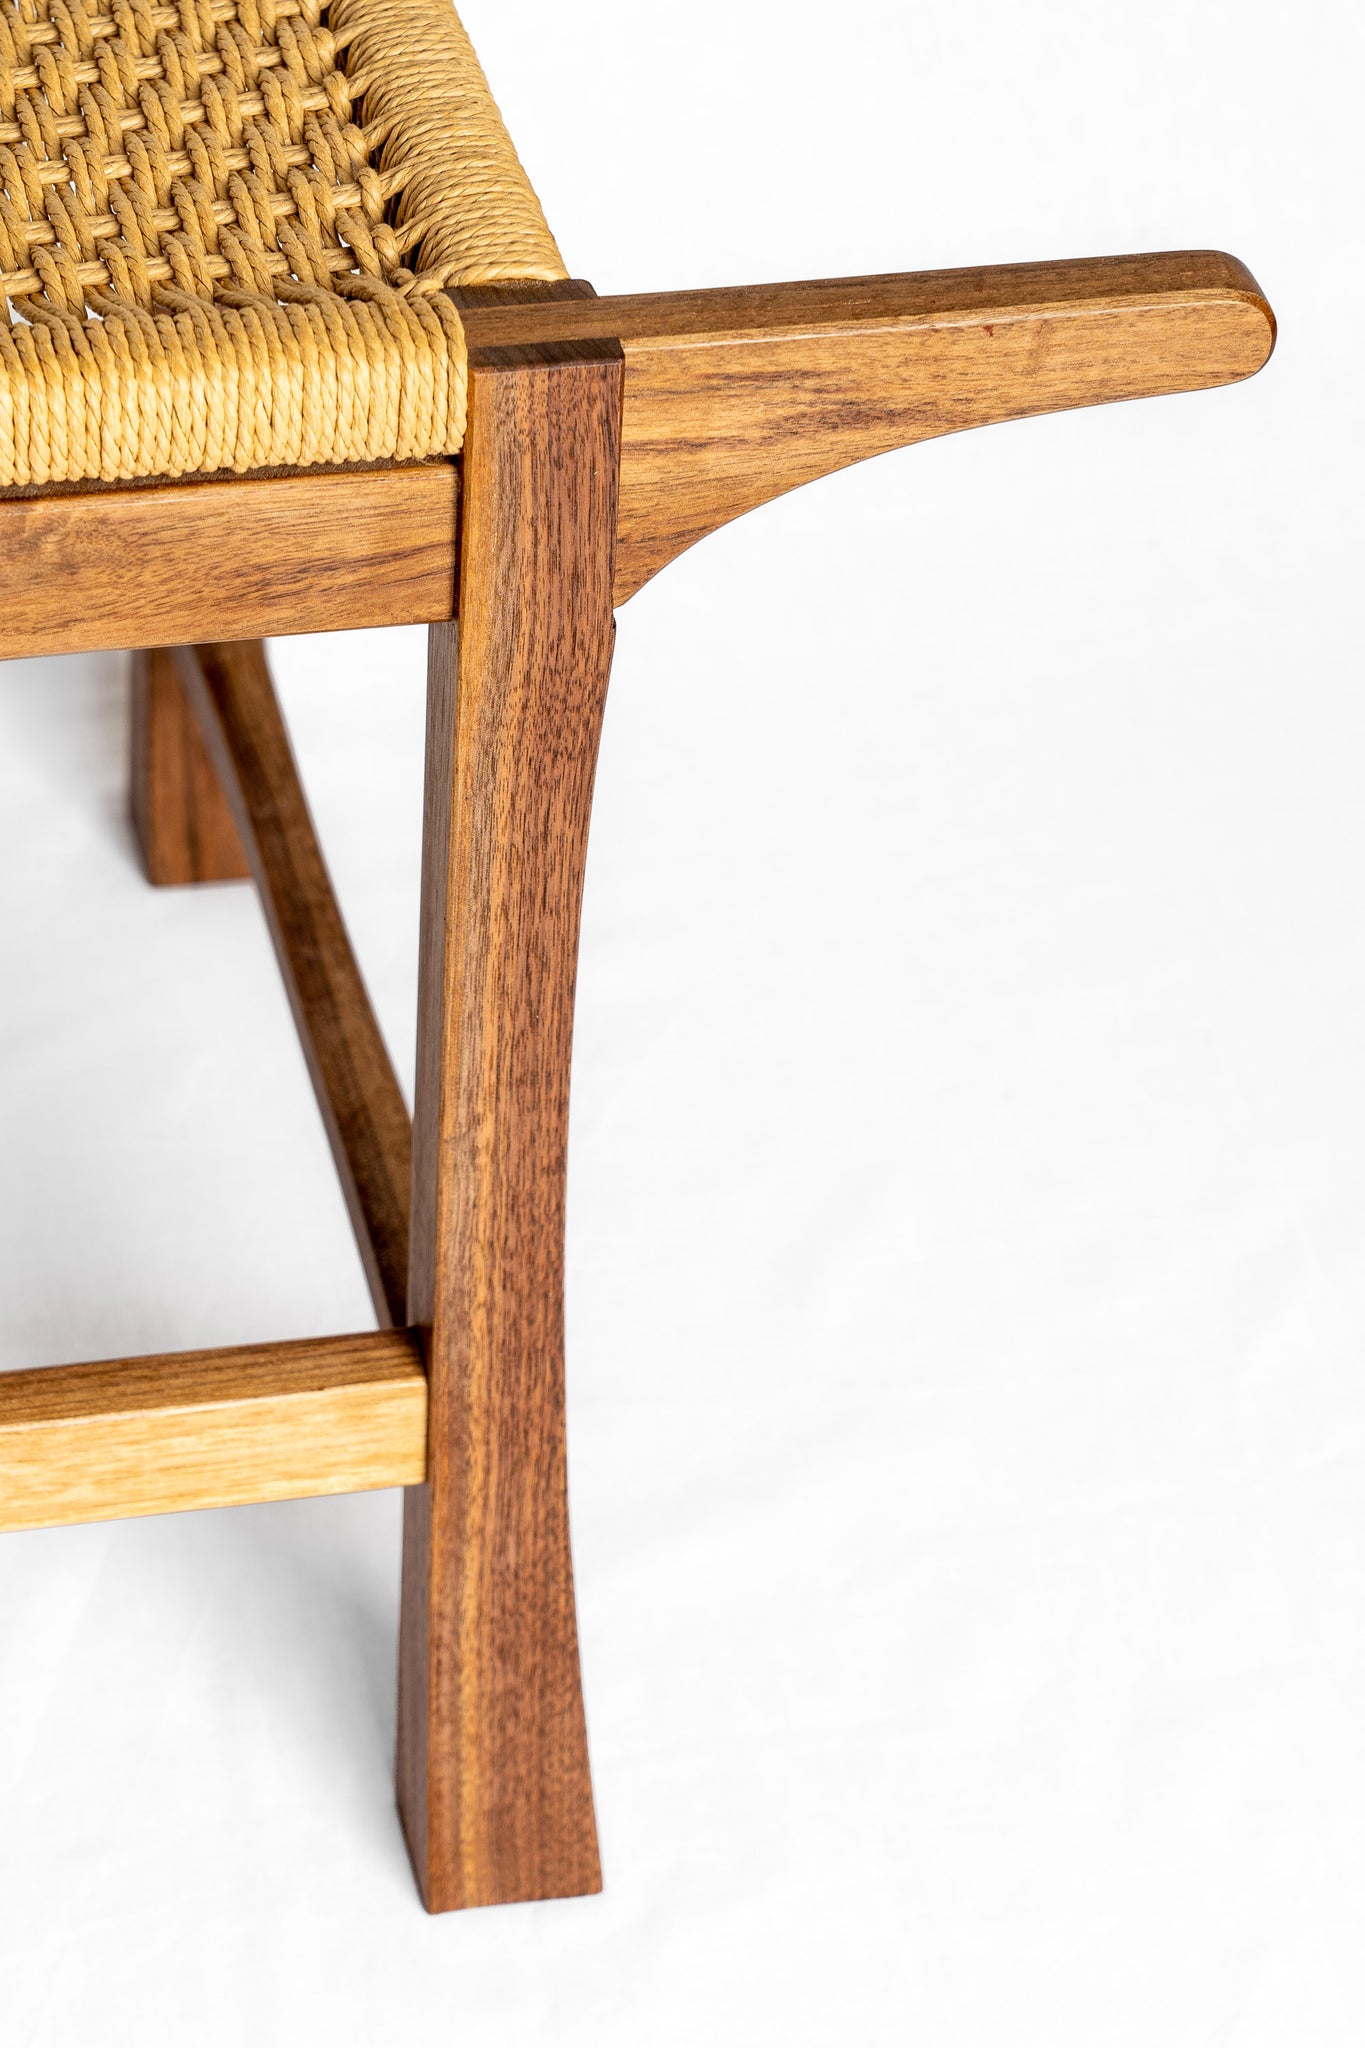 Danish Weave Bench – Qualizza Fine Woodworking